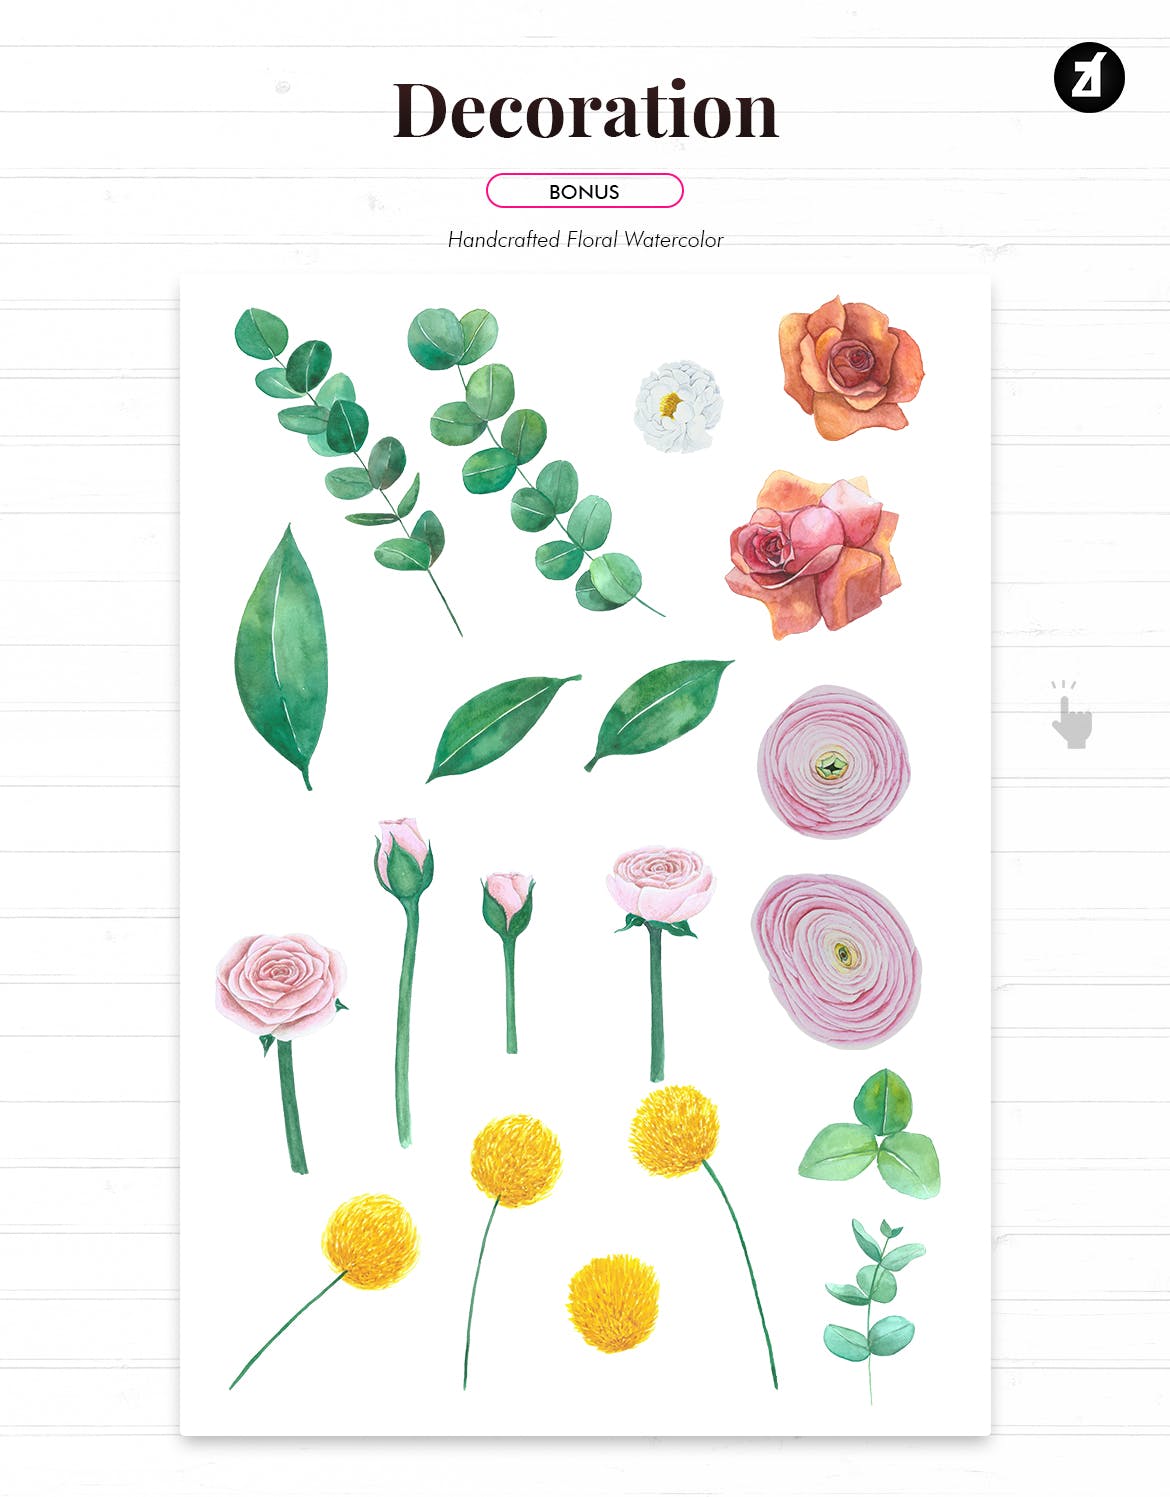 水彩手绘花卉图案设计素材 Floral pattern hand-drawn watercolor illustration插图(4)